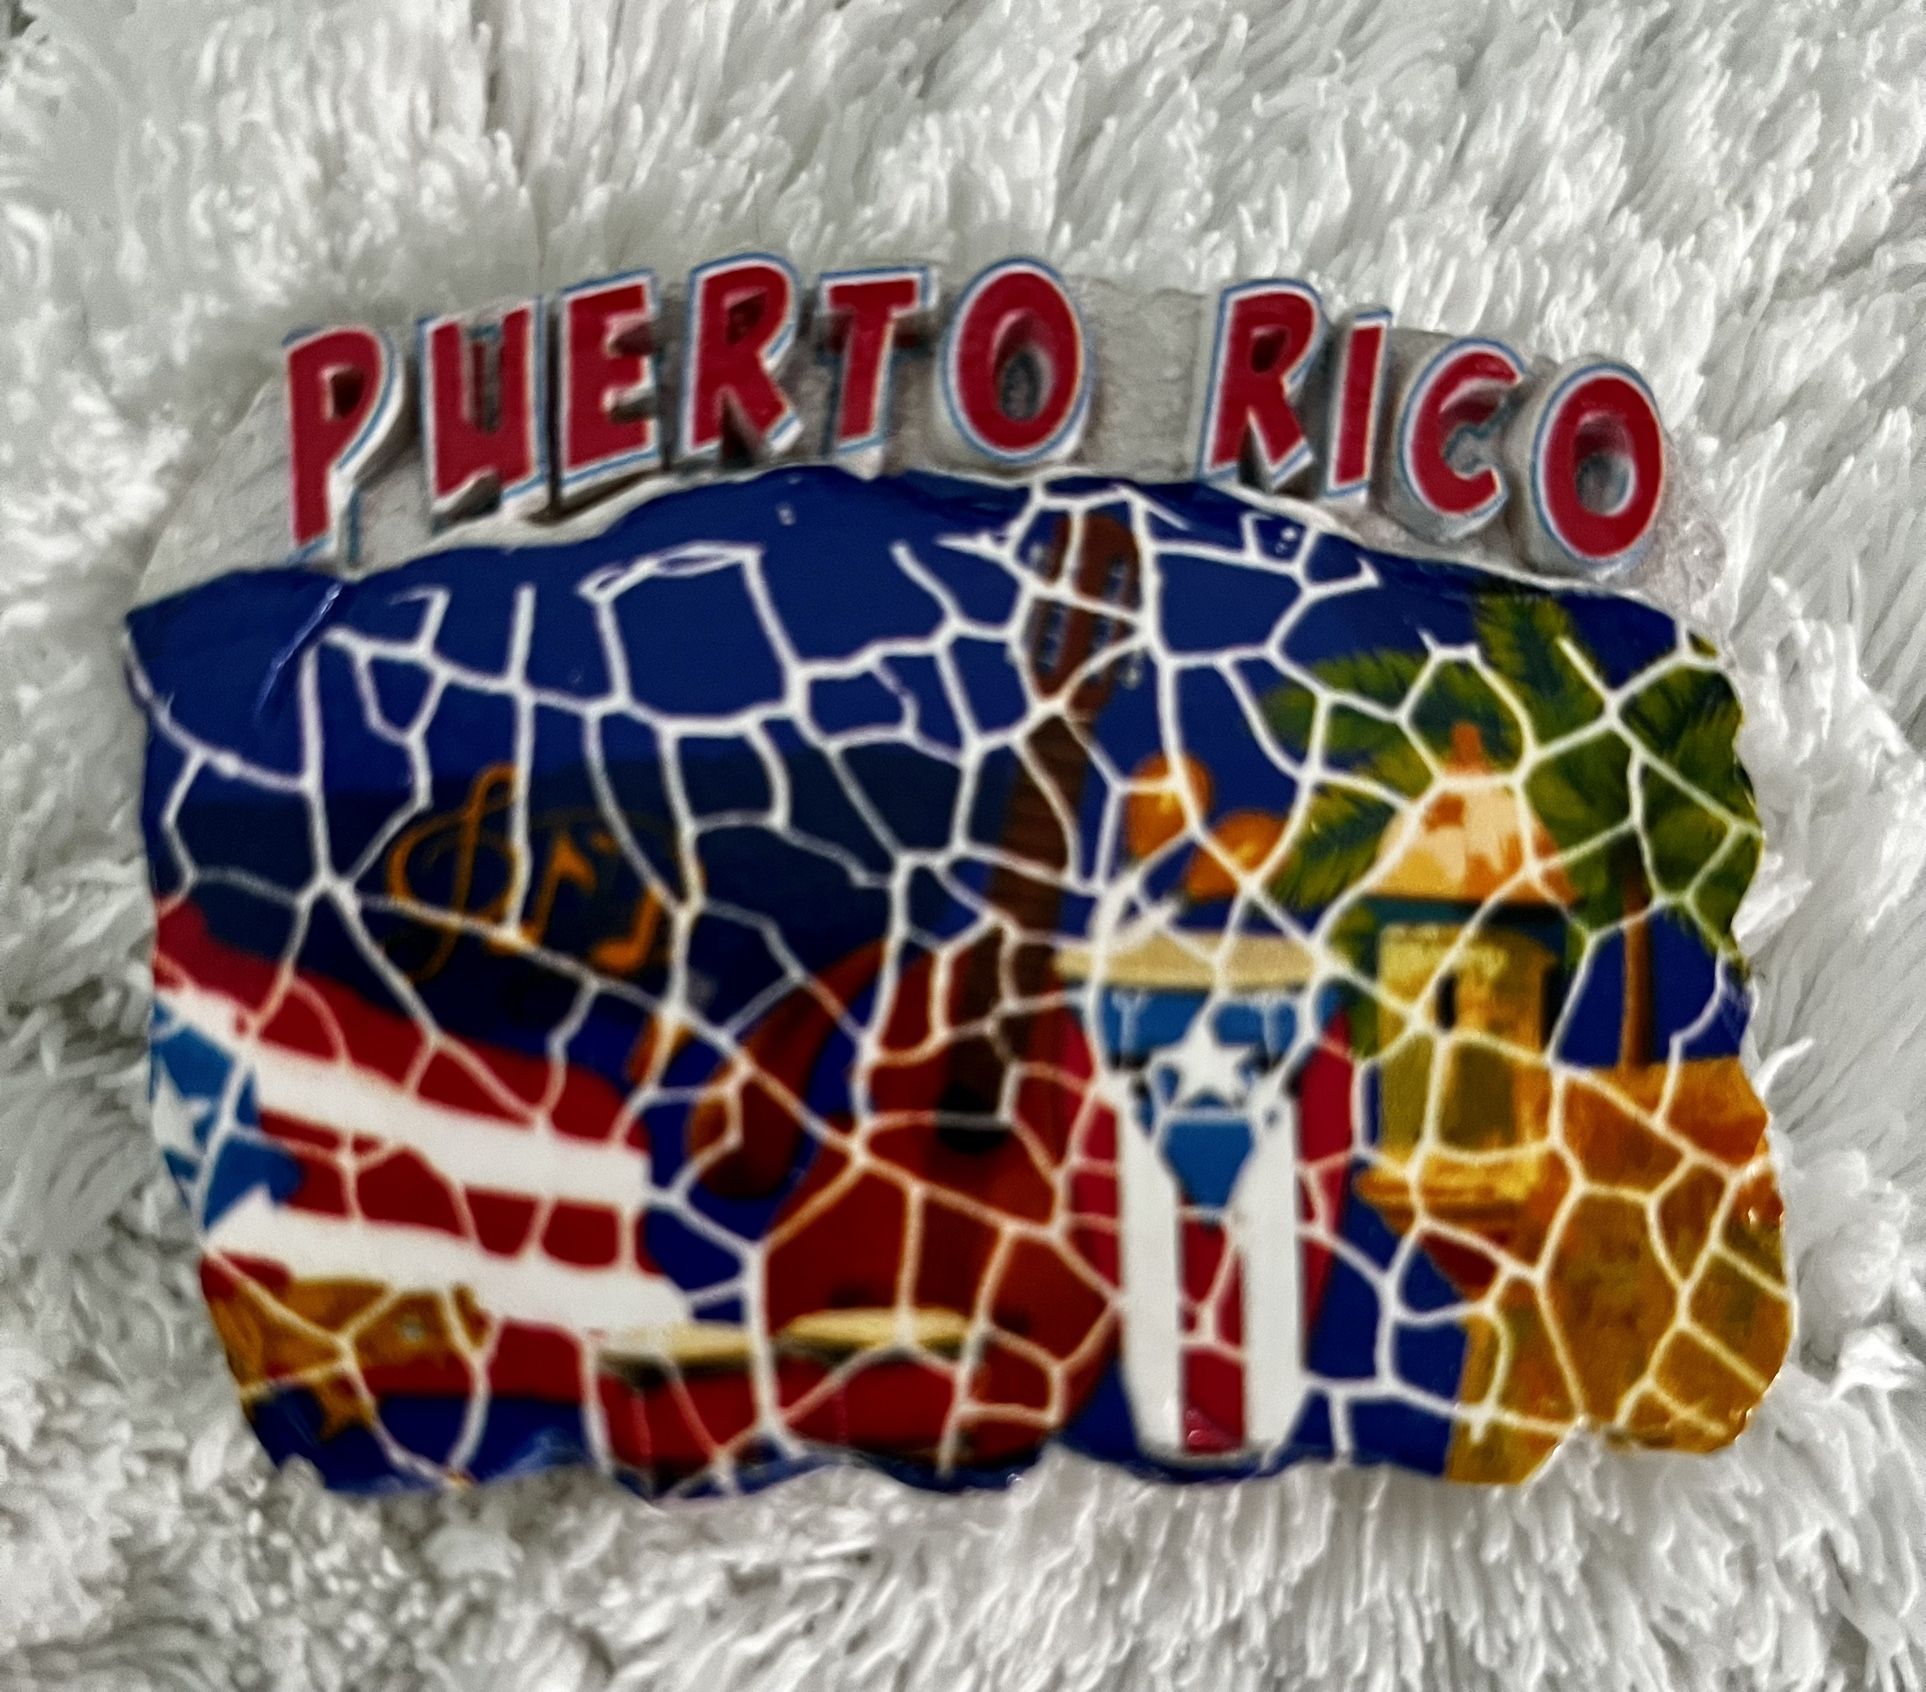 New Fridge Magnet Puerto Rico